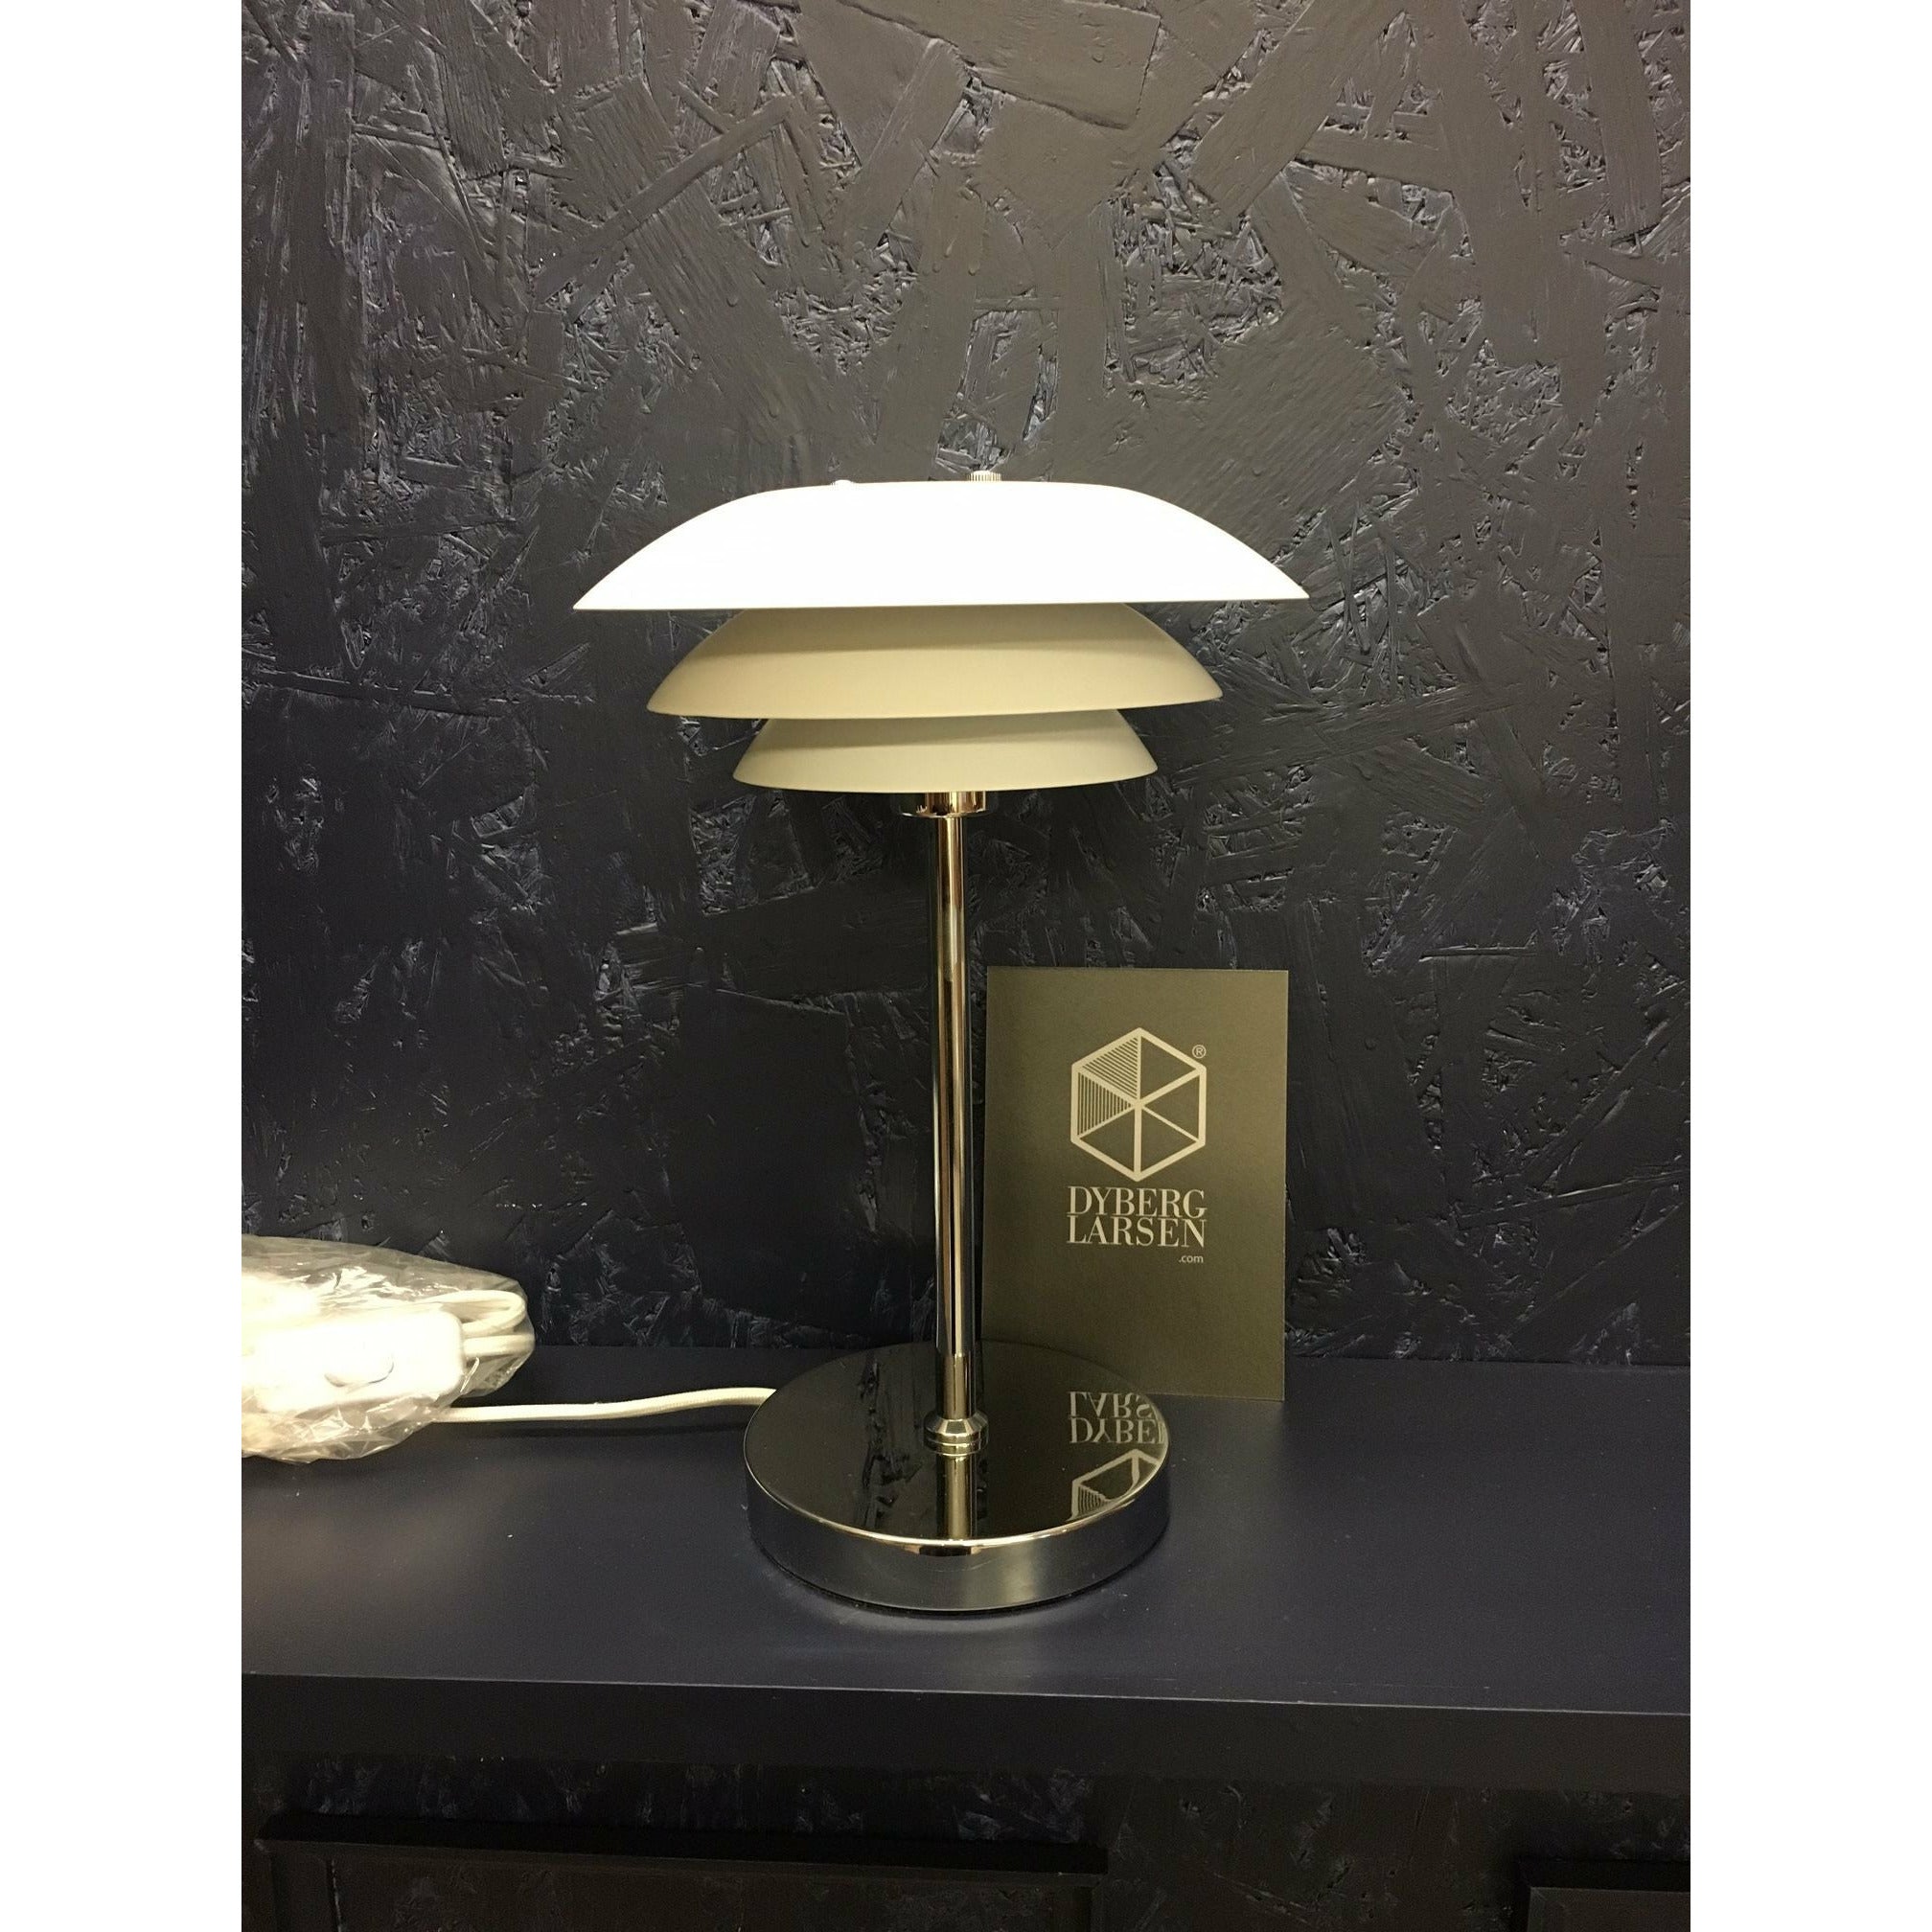 Dyberg Larsen Lampe de table DL20, verre opal